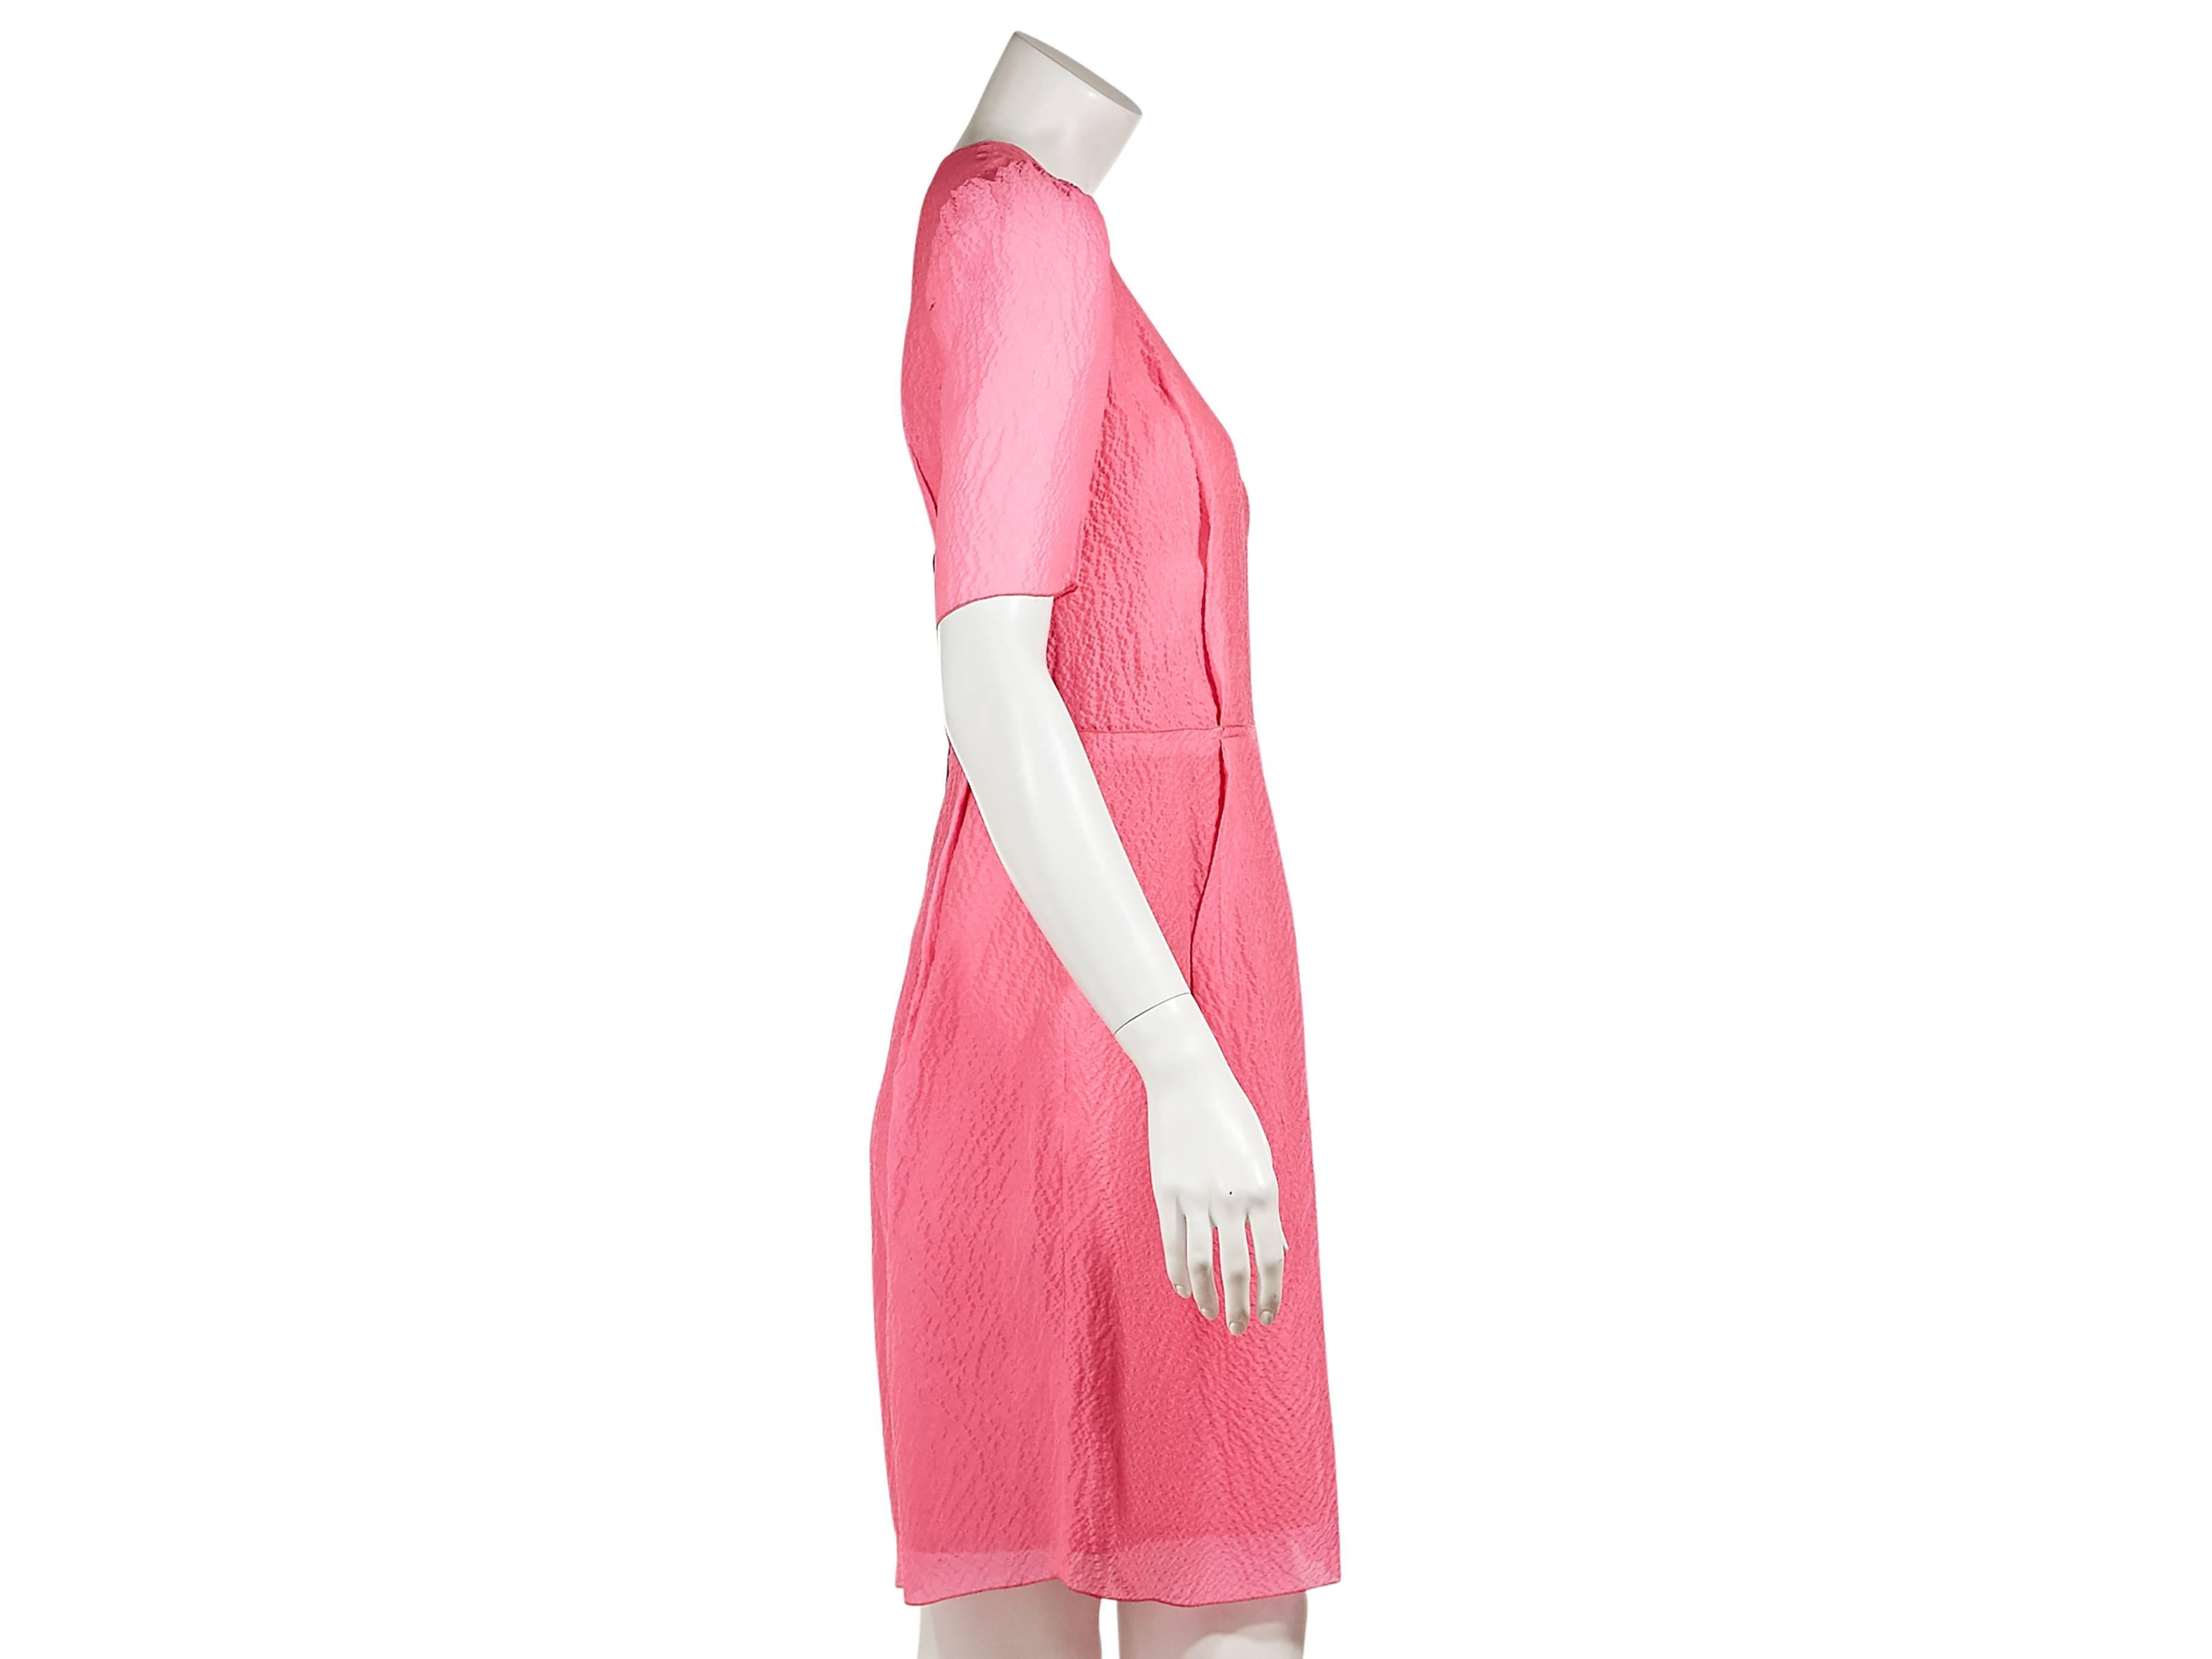 Hot pink textured silk sheath dress by Lanvin.  Crewneck.  Elbow-length sleeves.  Dart seams create a flattering silhouette. Exposed back zip closure. 